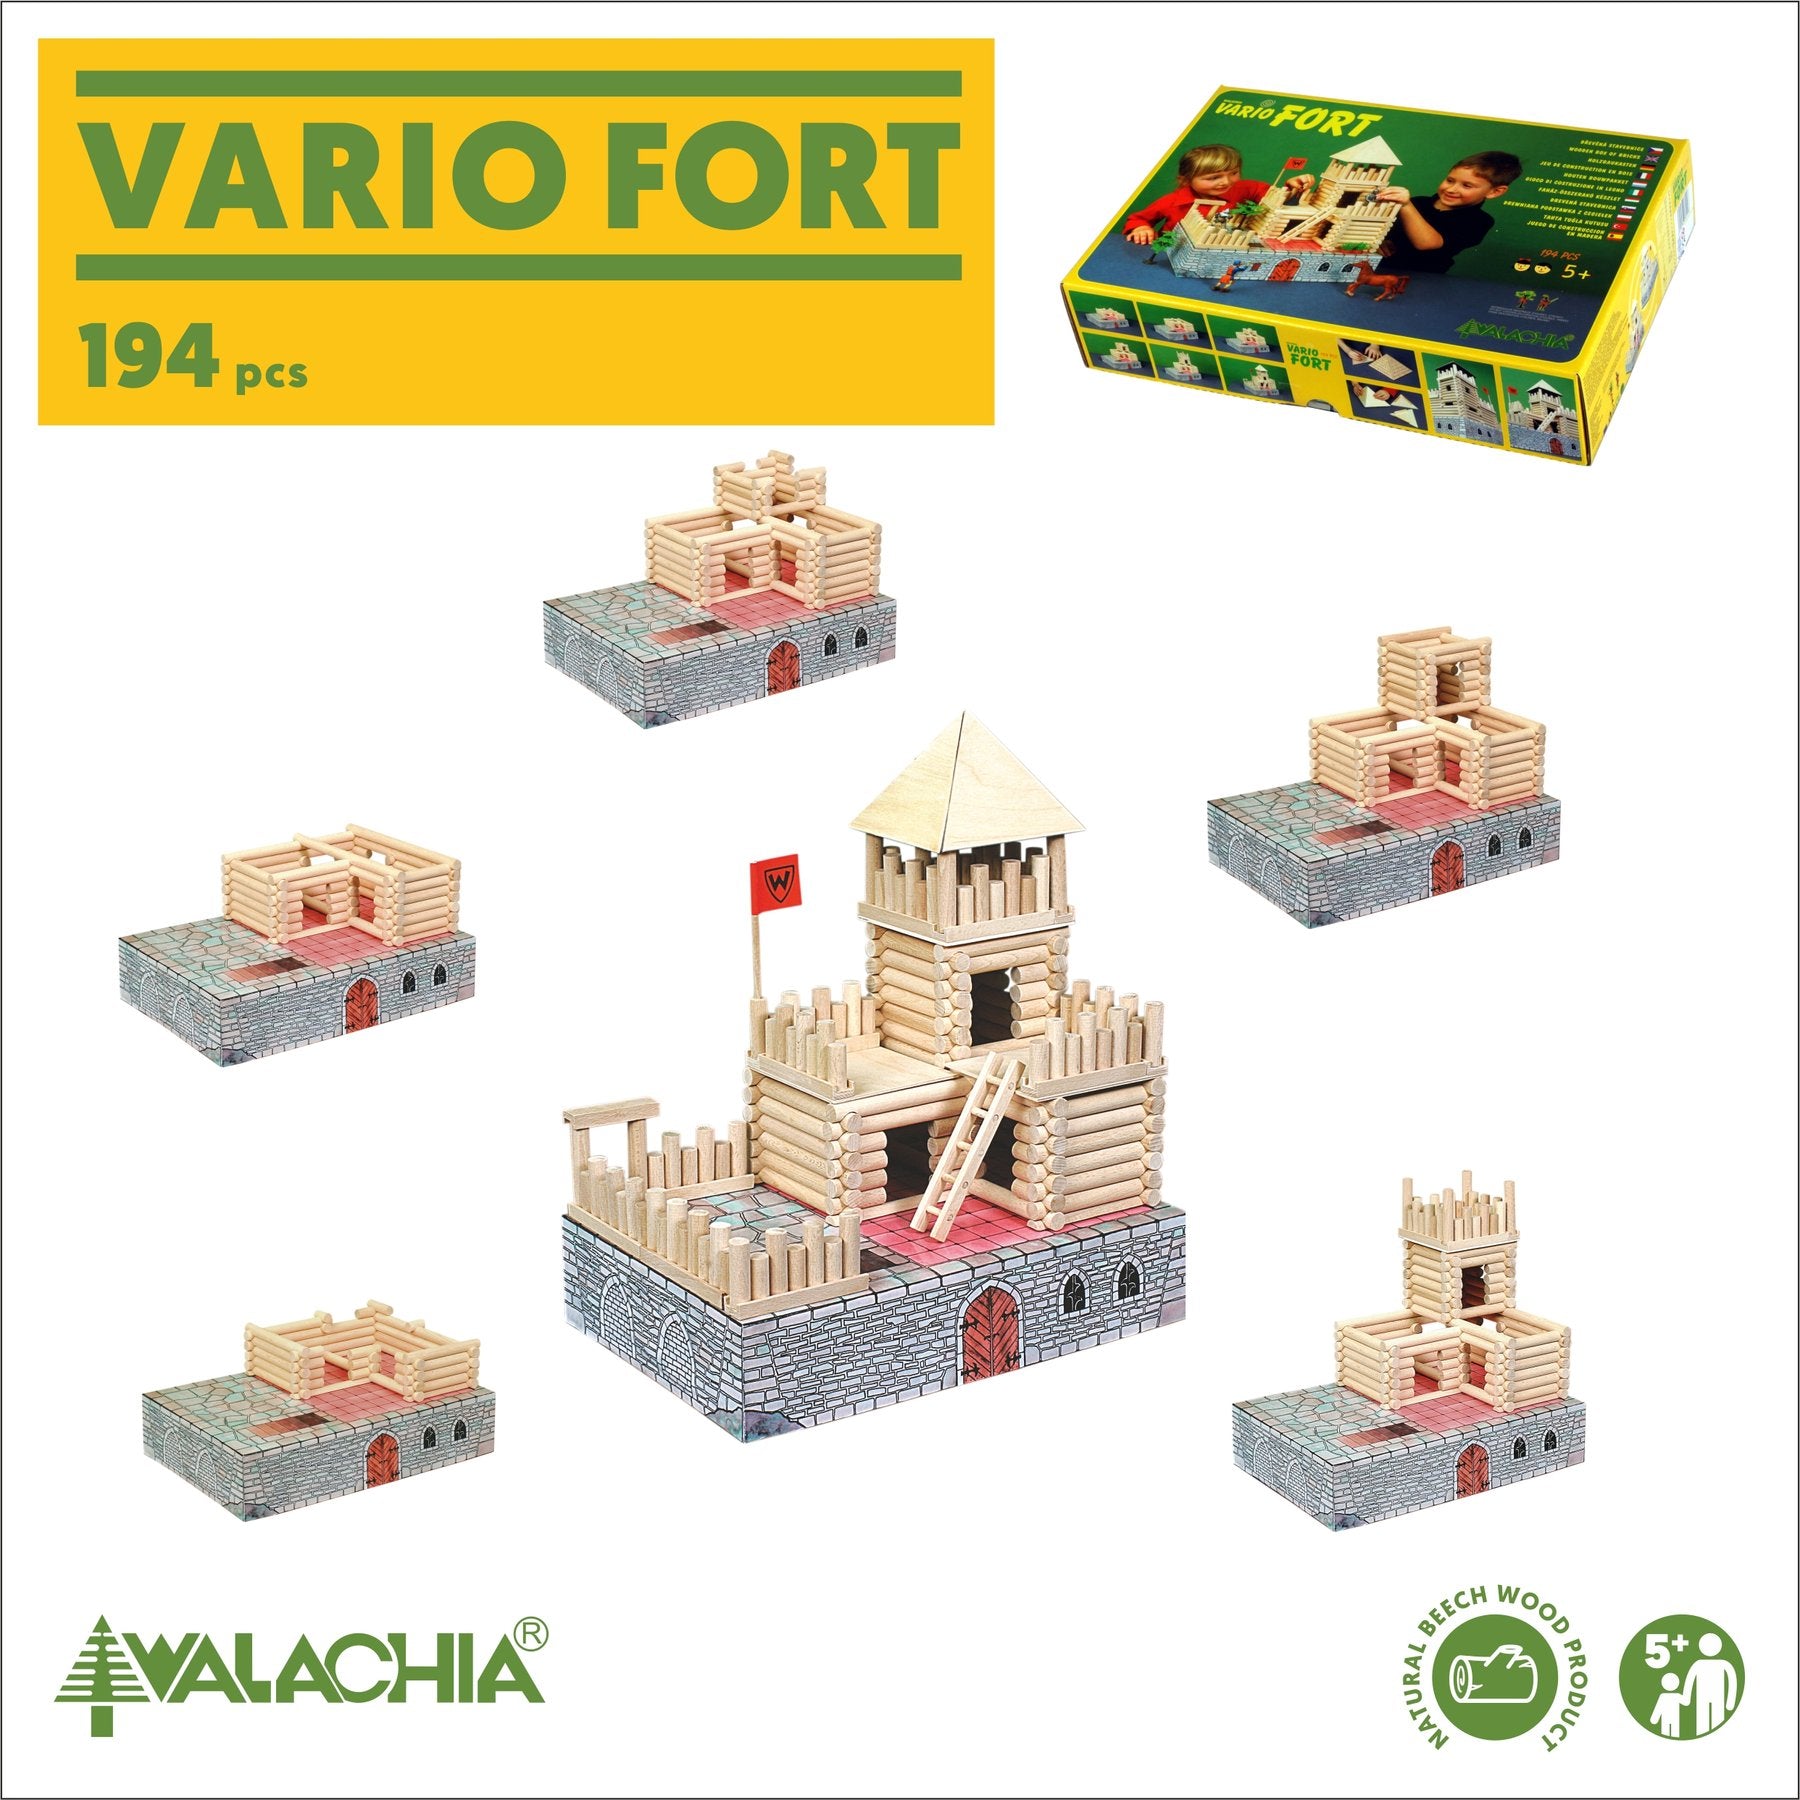 Walachia Vario Fort set 194 Pieces | 30% OFF | Children of the Wild